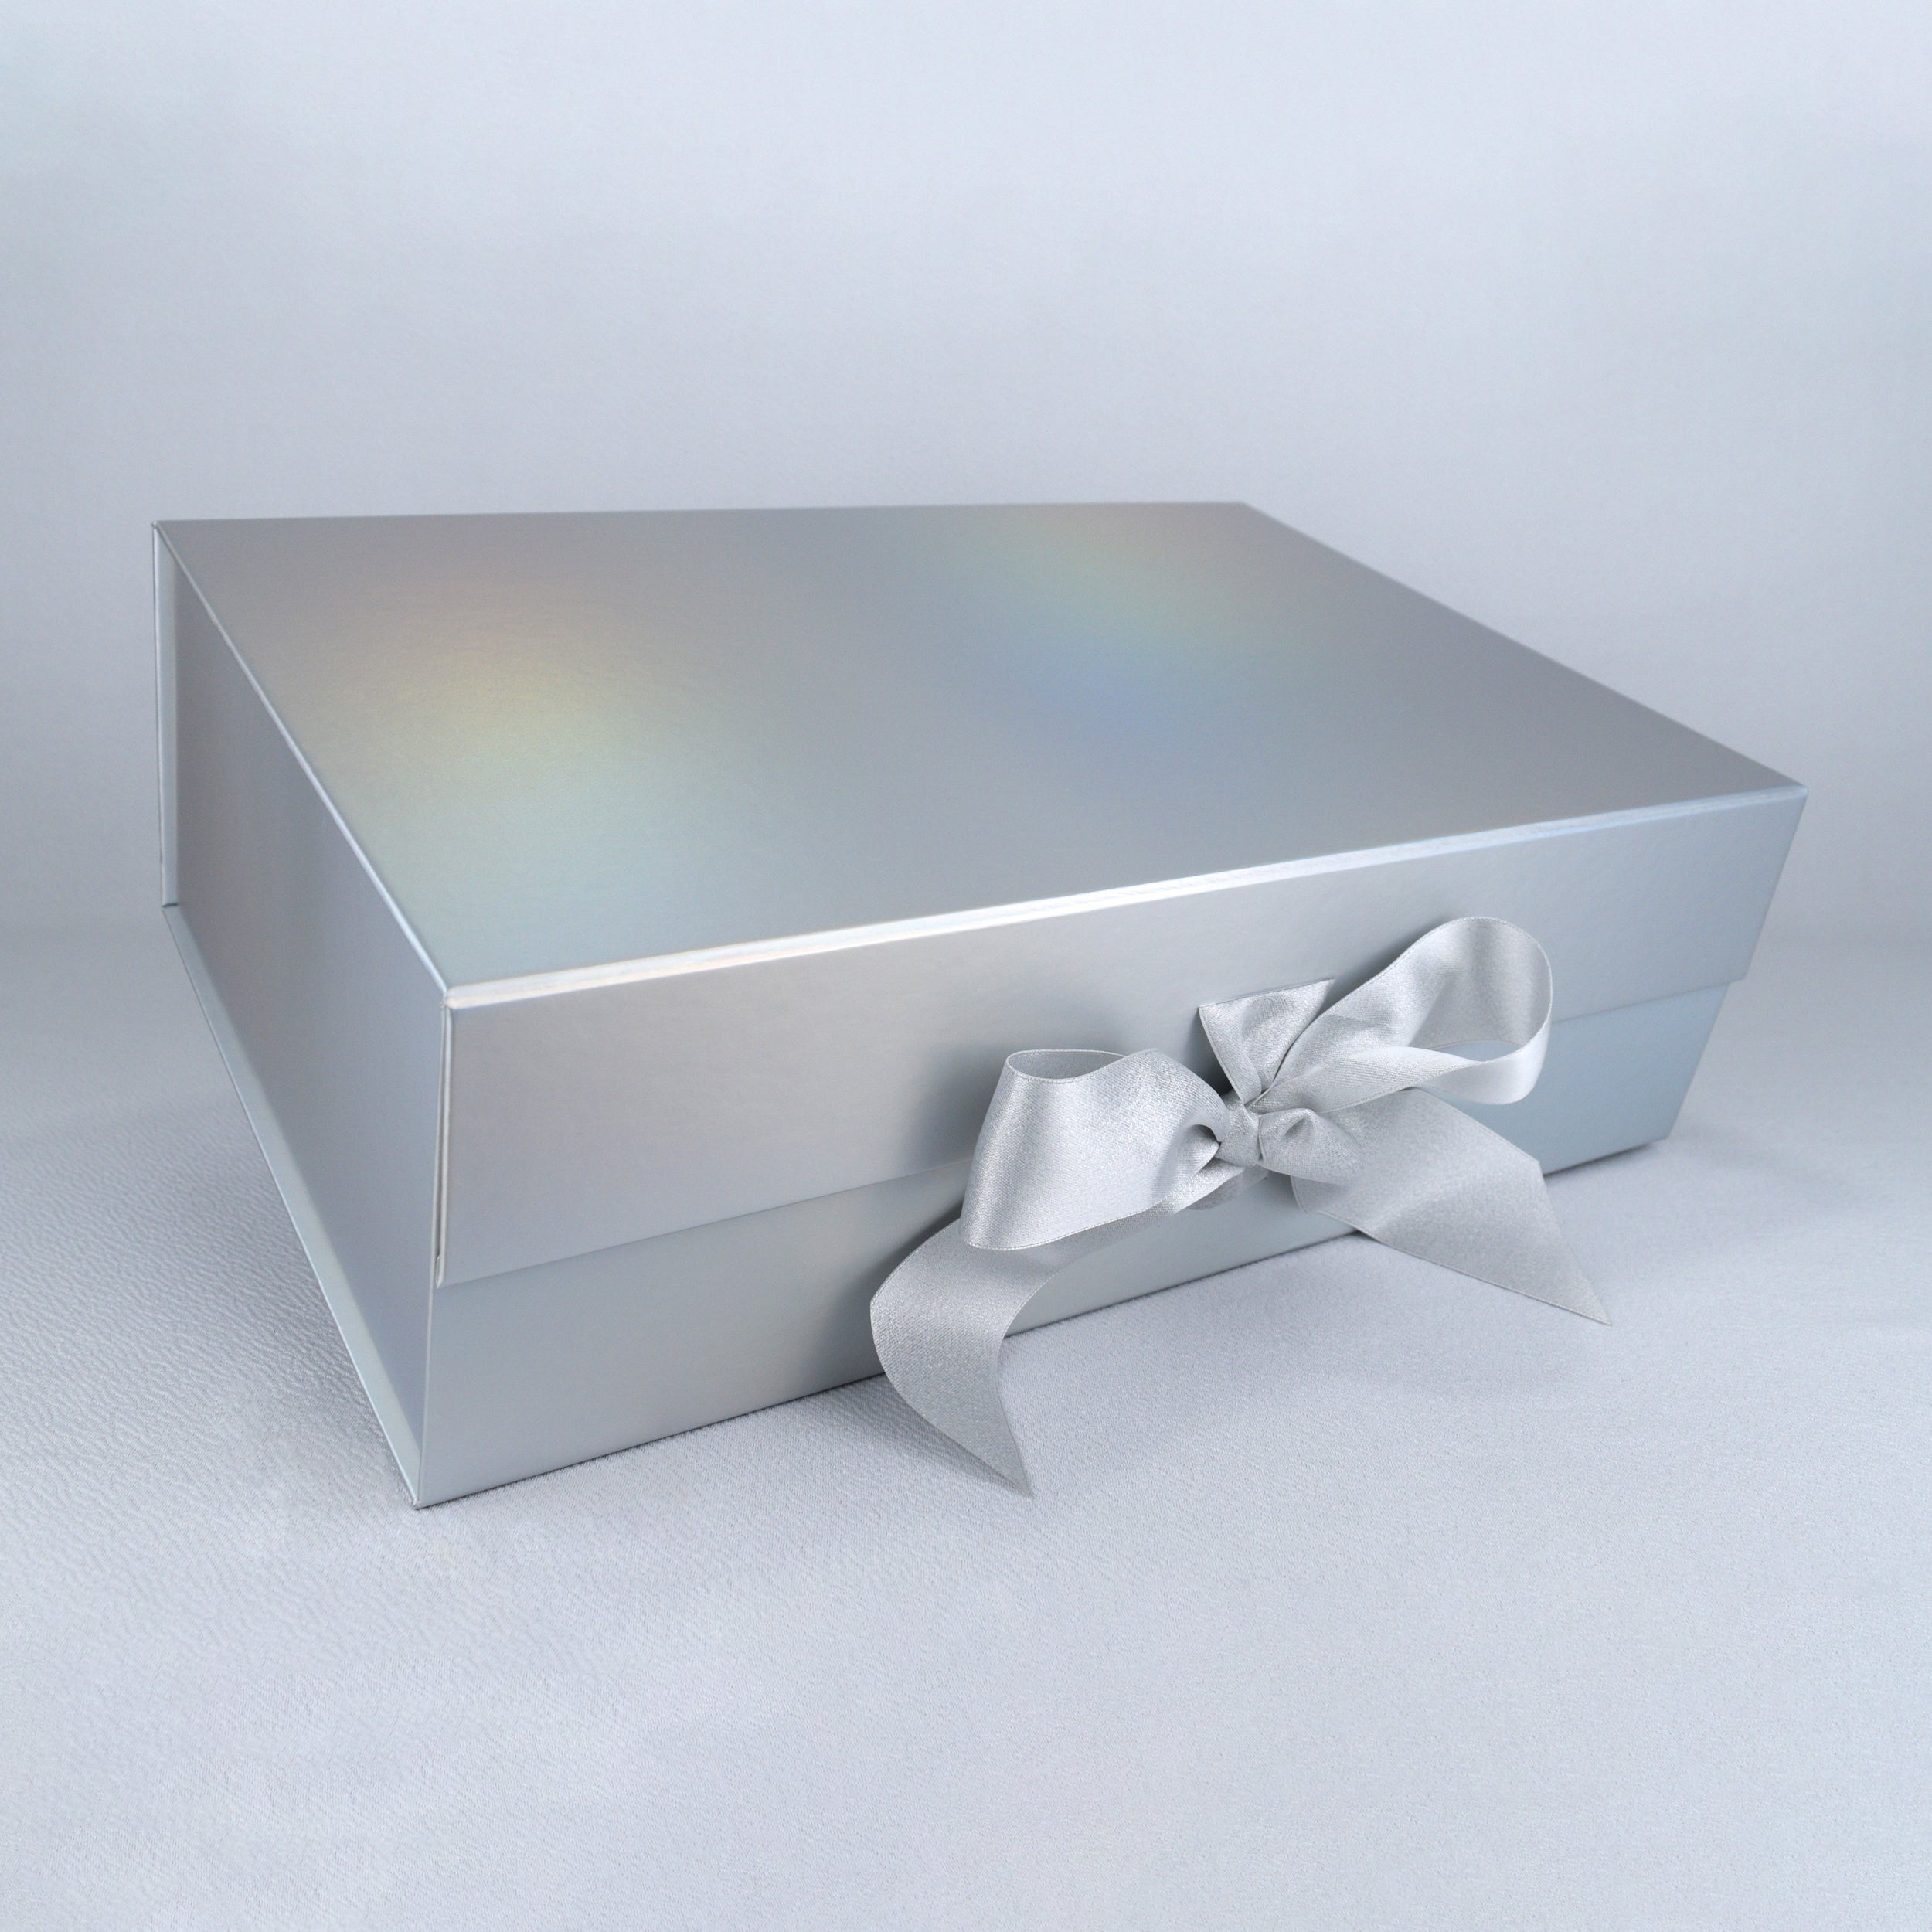 Blue Gift Box Silver Ribbon Stock Photo 85997485 | Shutterstock